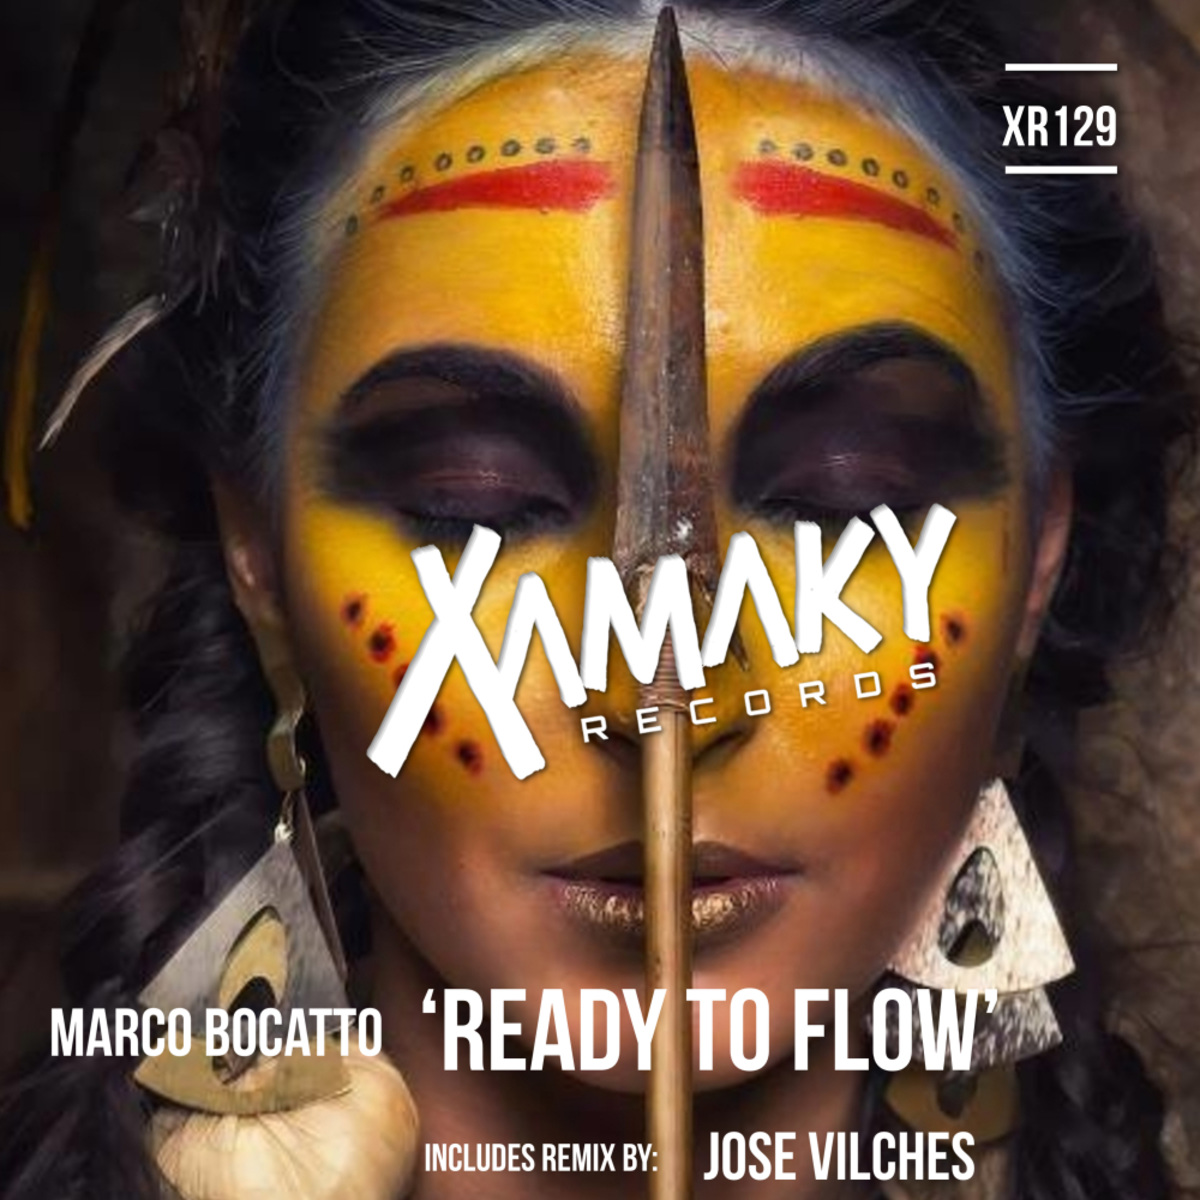 Marco Bocatto - Ready To Flow / Xamaky Records